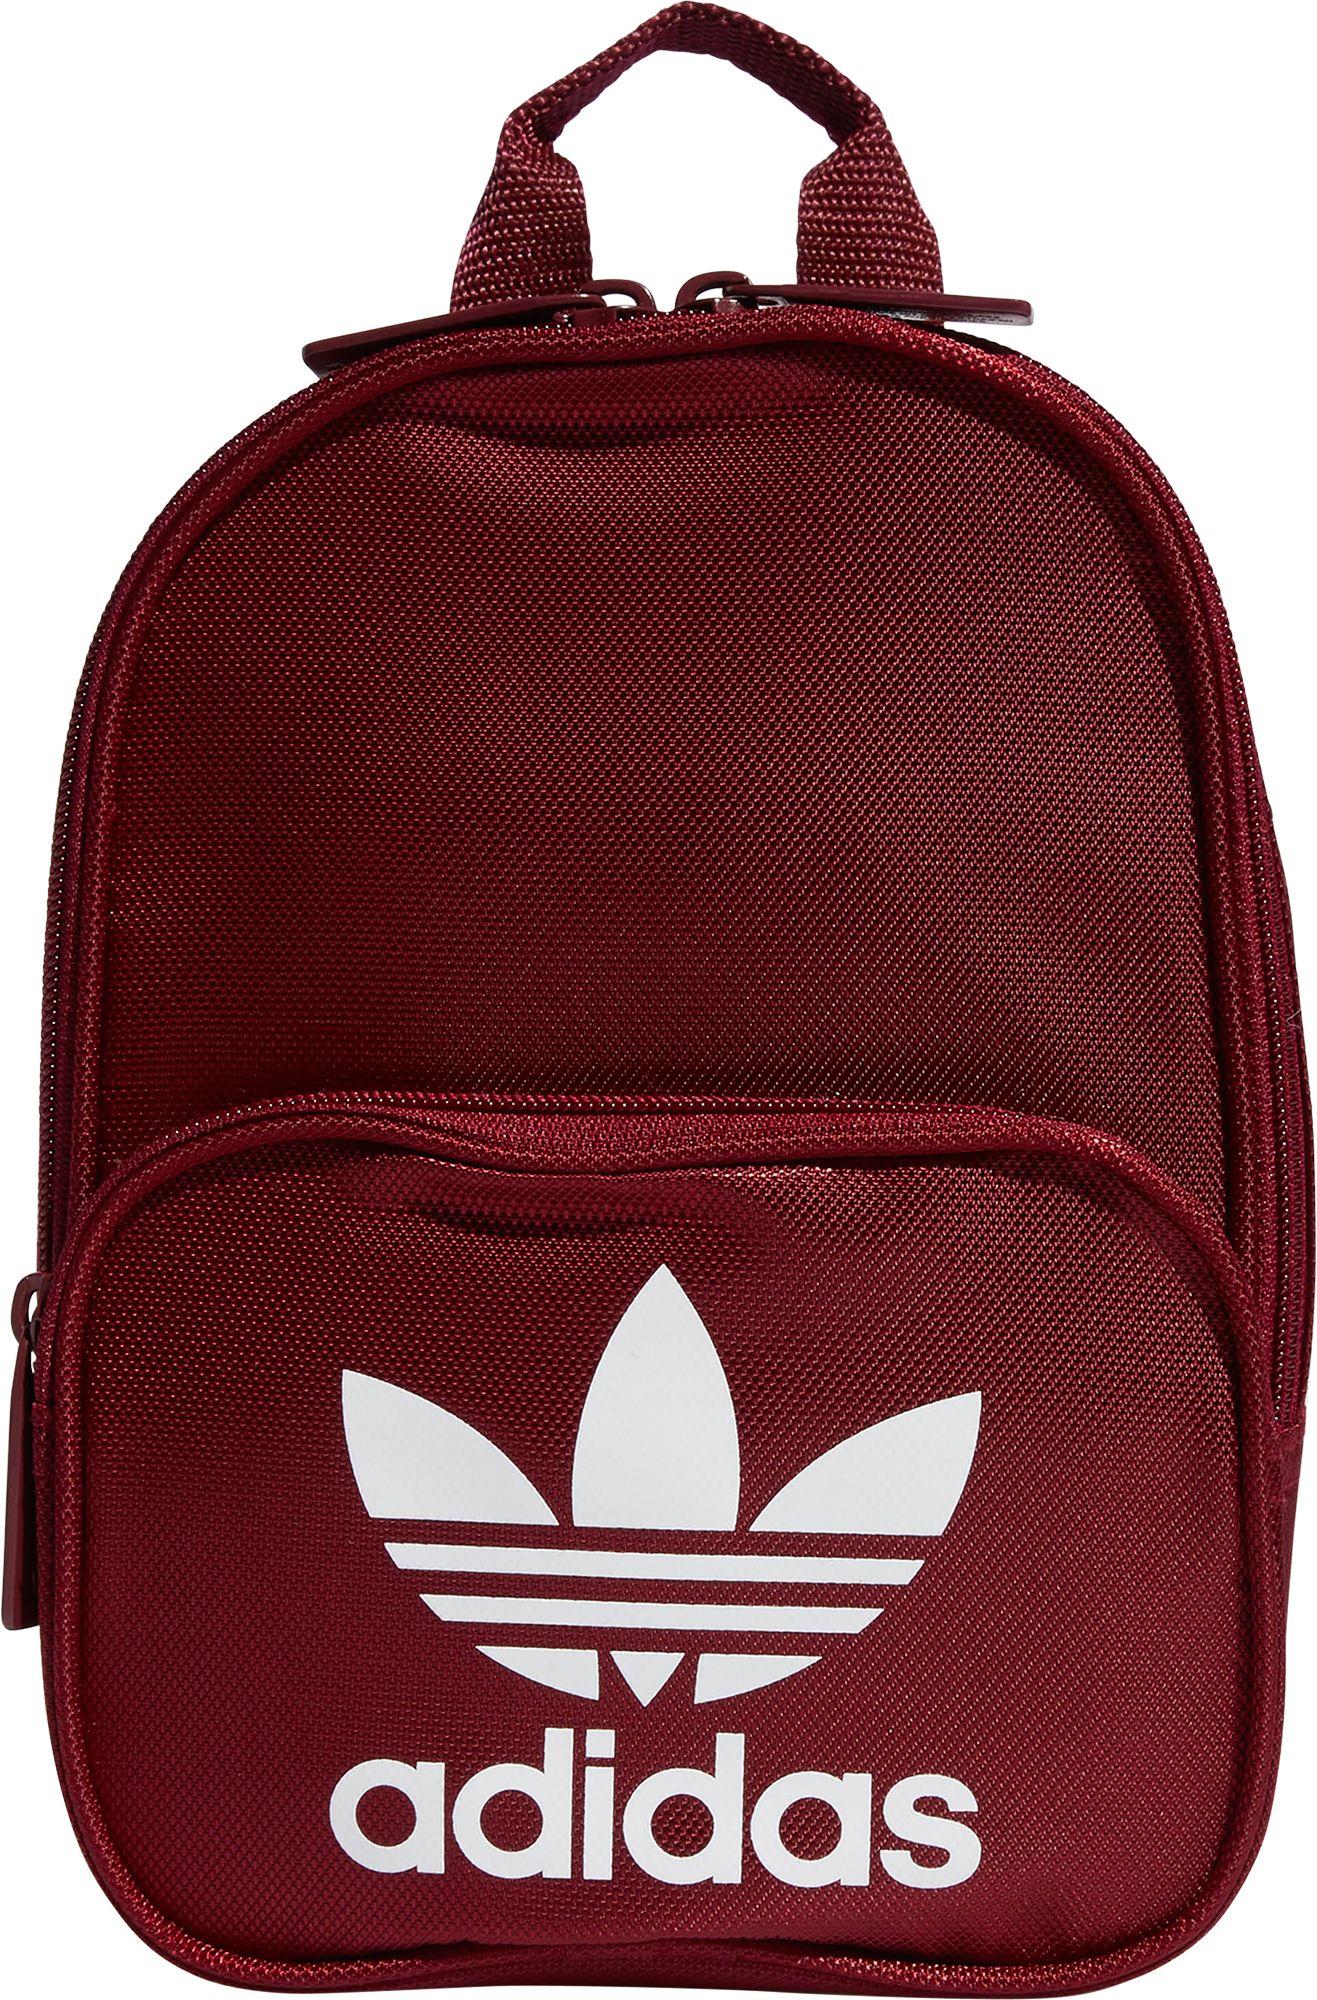 adidas Originals Santiago Mini Backpack in Red - Lyst